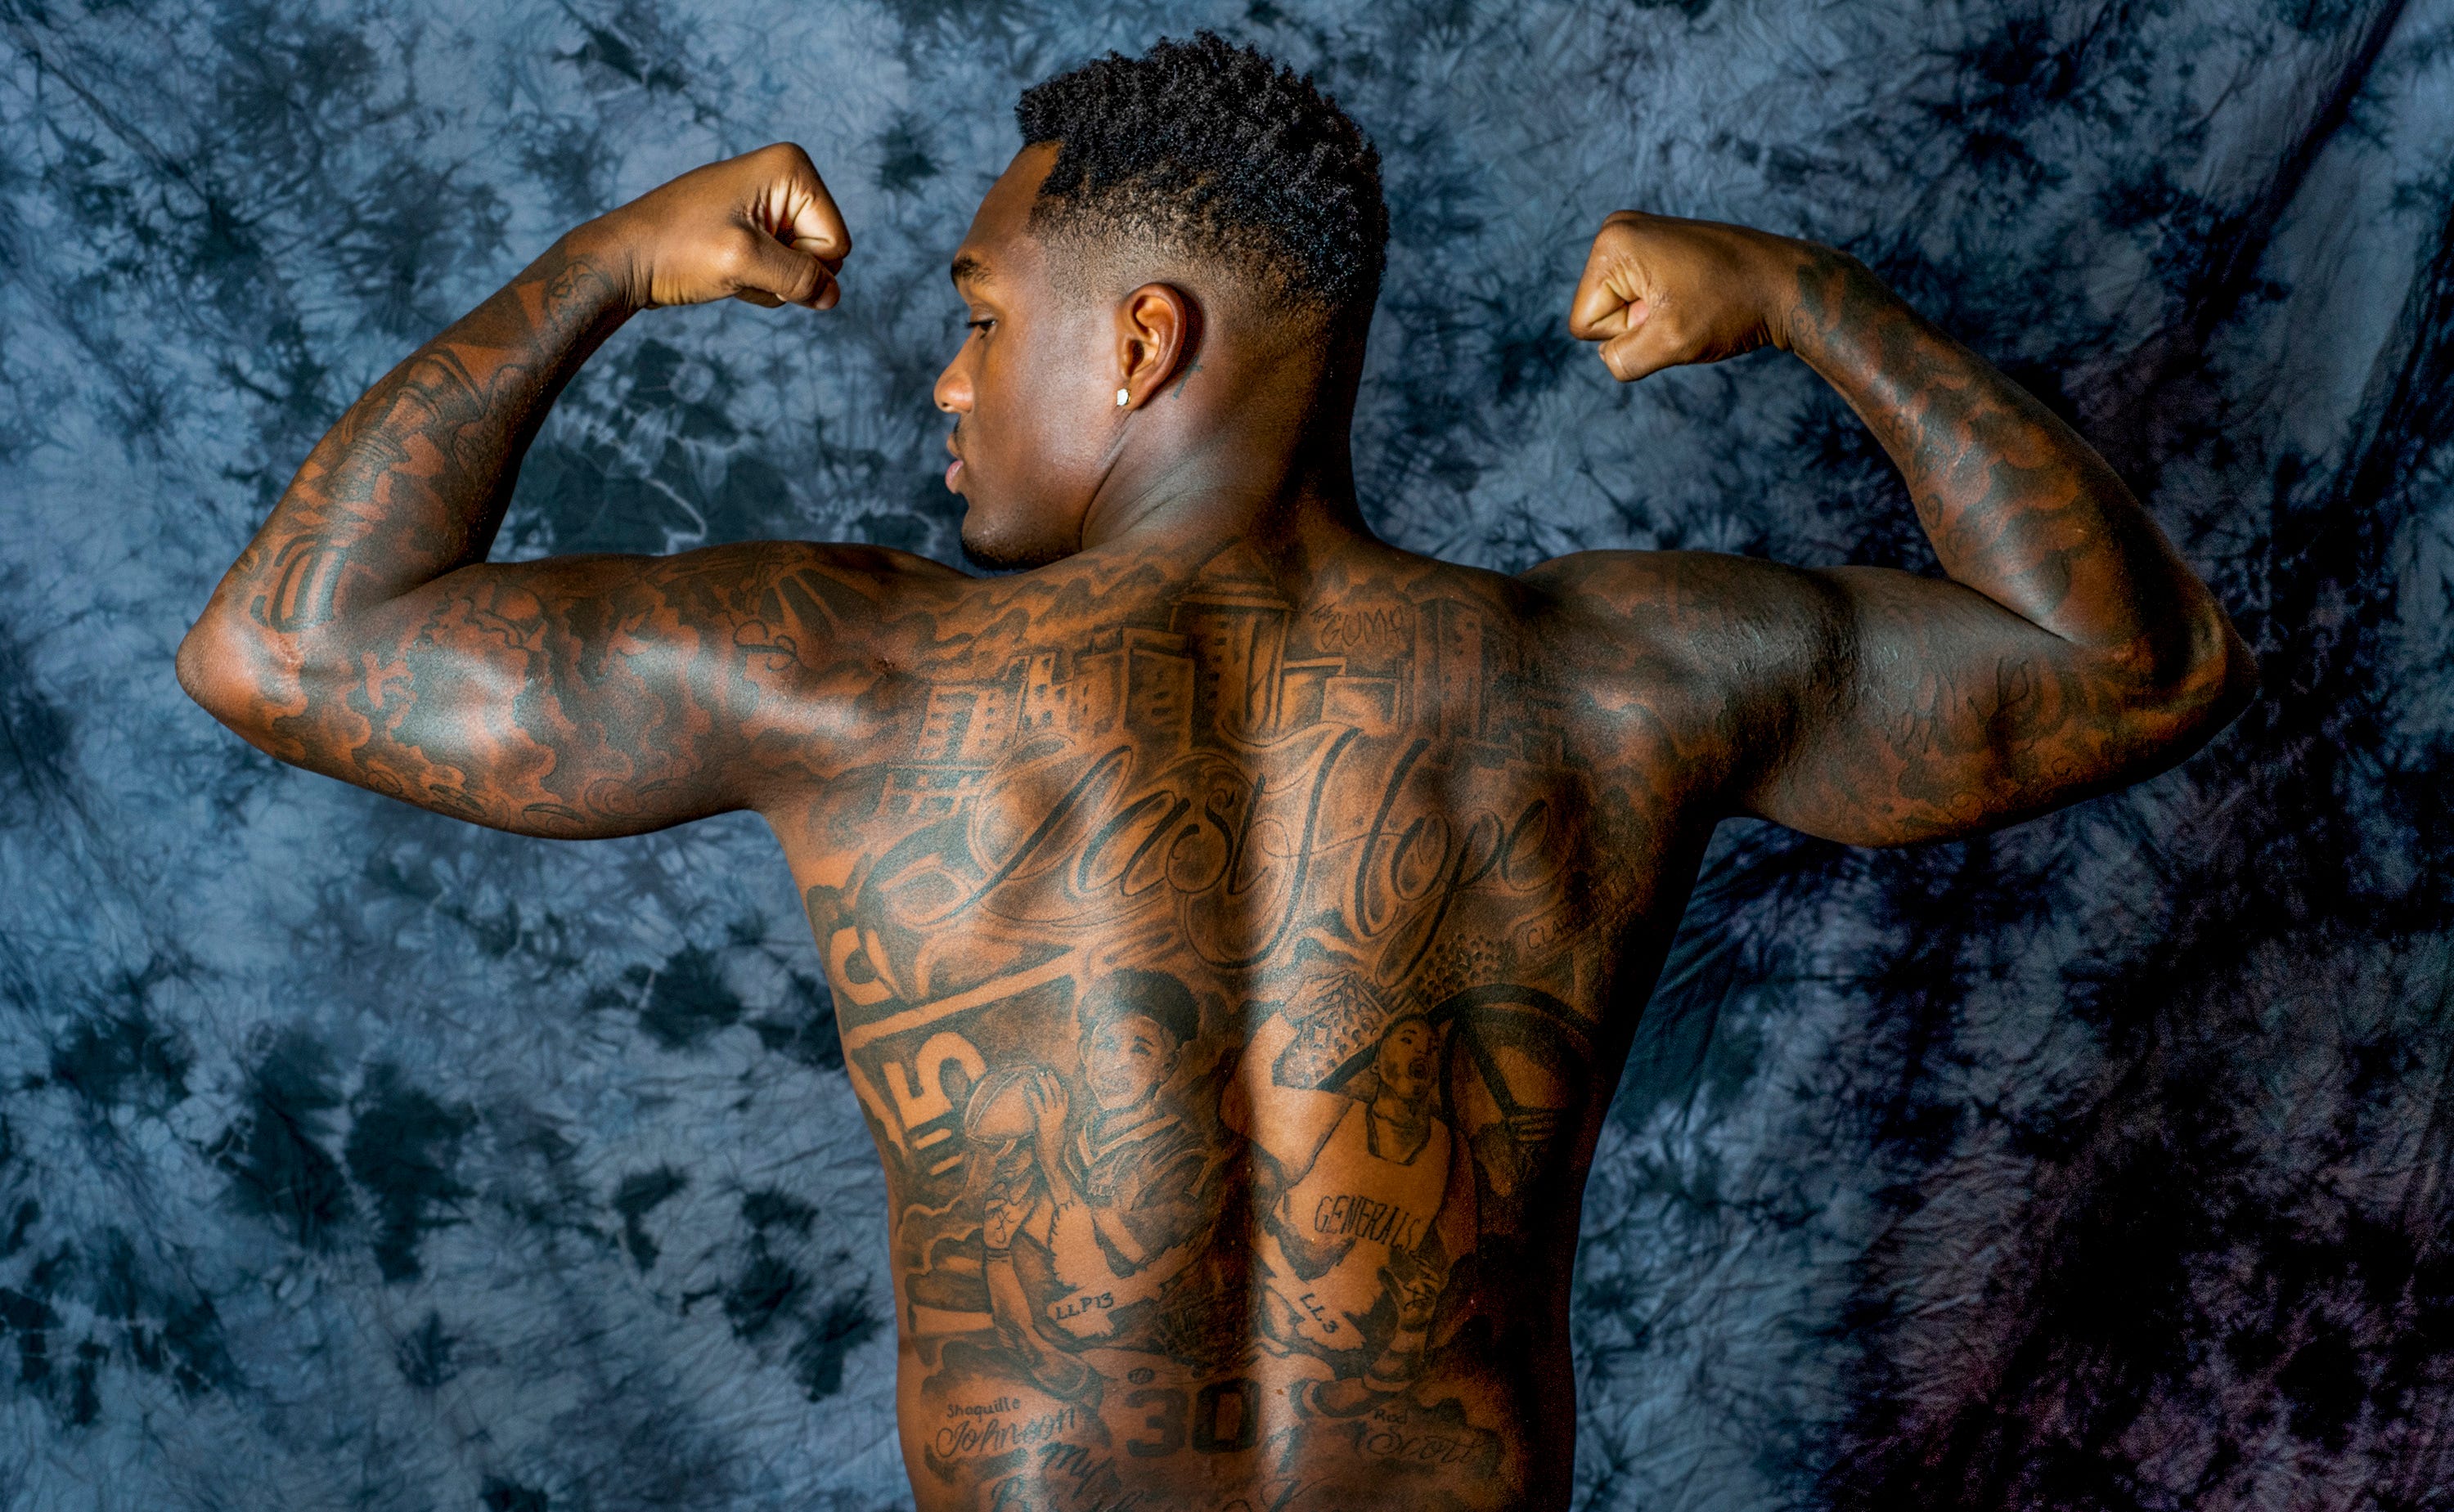 Alabama QB AJ McCarron adds more ink to his already massive chest tattoo